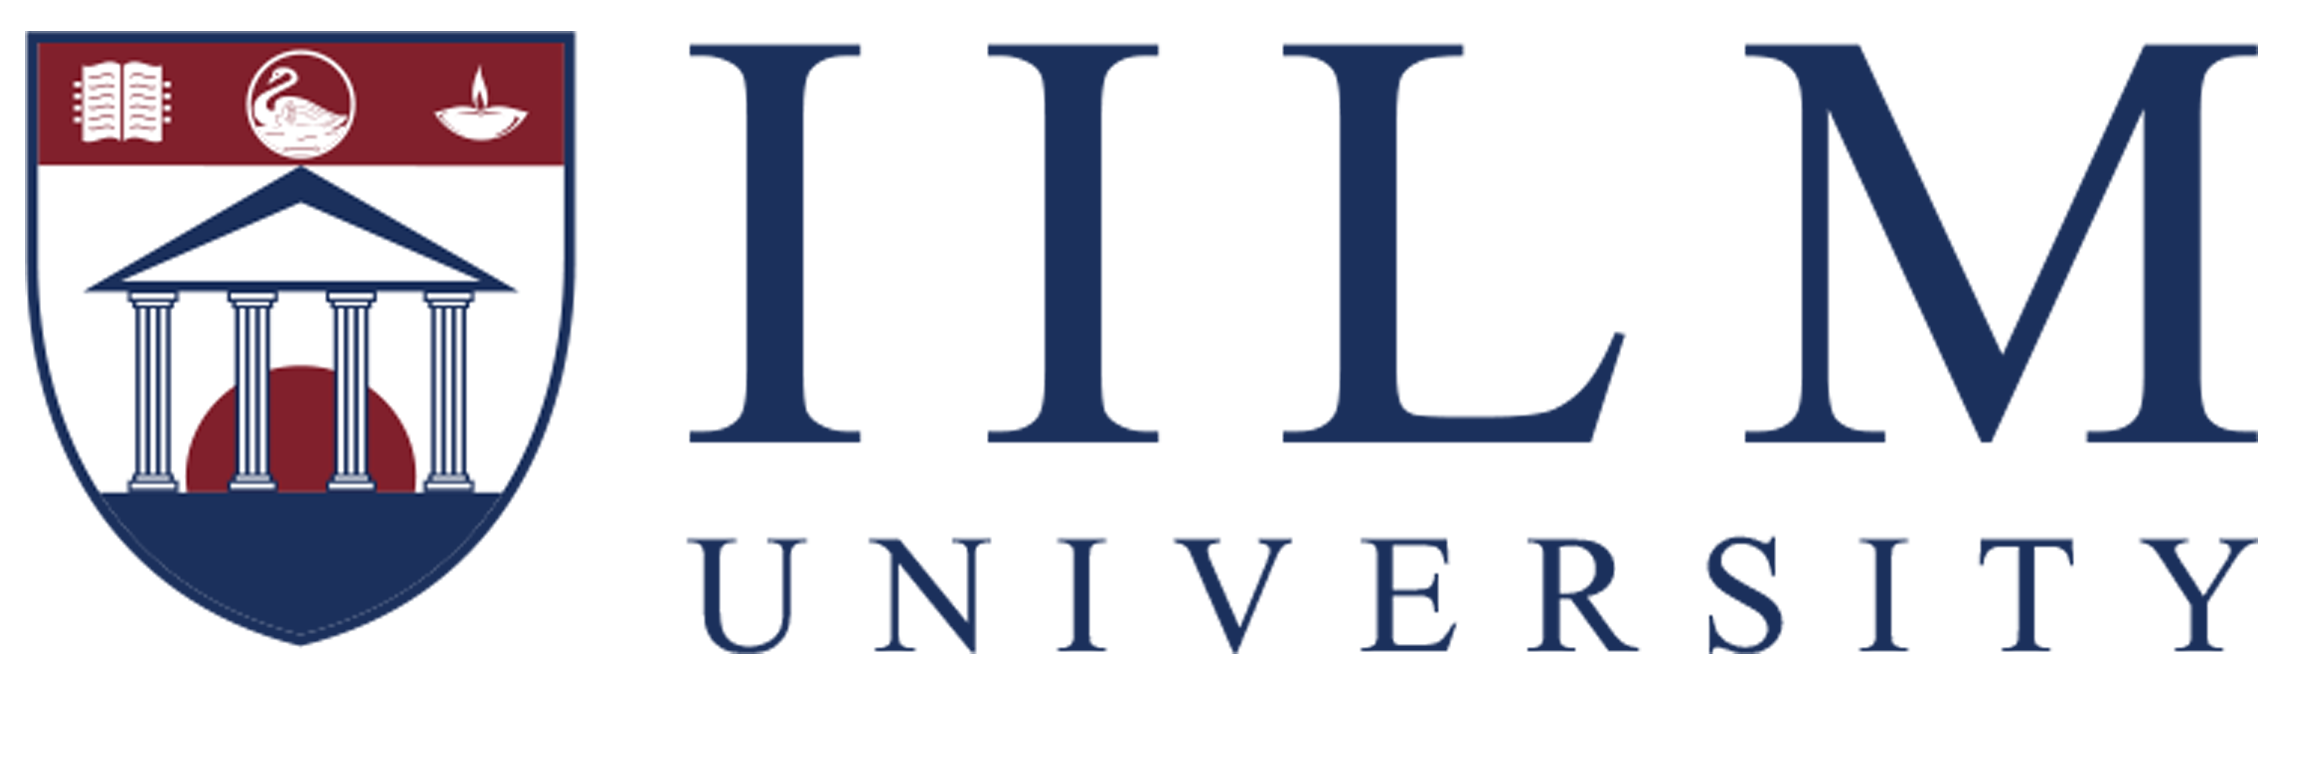 IILM University | Law, Management, Engineering & Liberal Arts